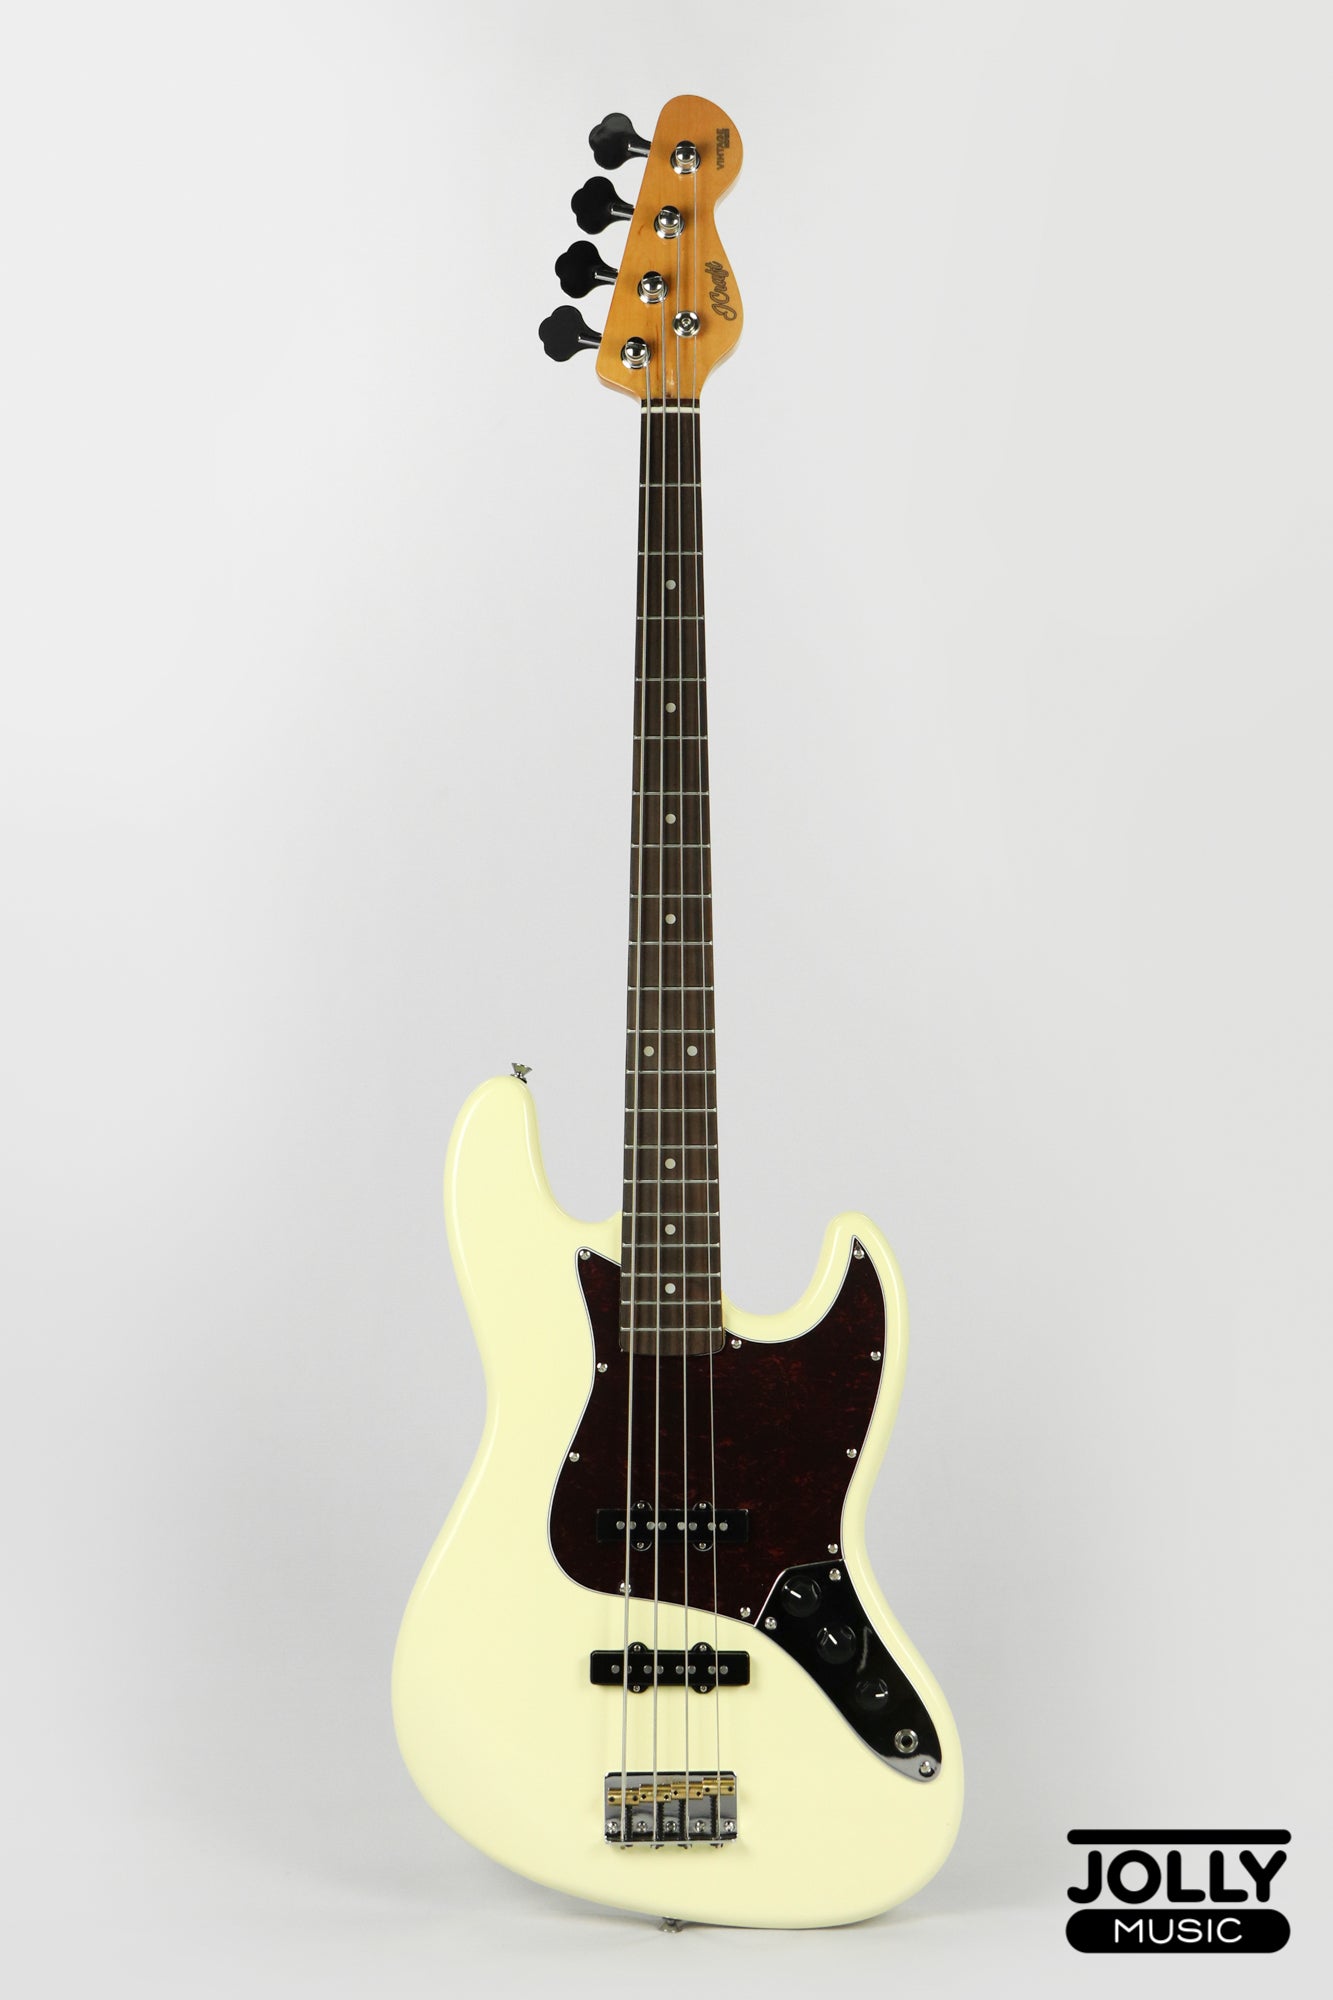 JCraft JB-3V J-Offset 4-String Bass Guitar - Vintage White